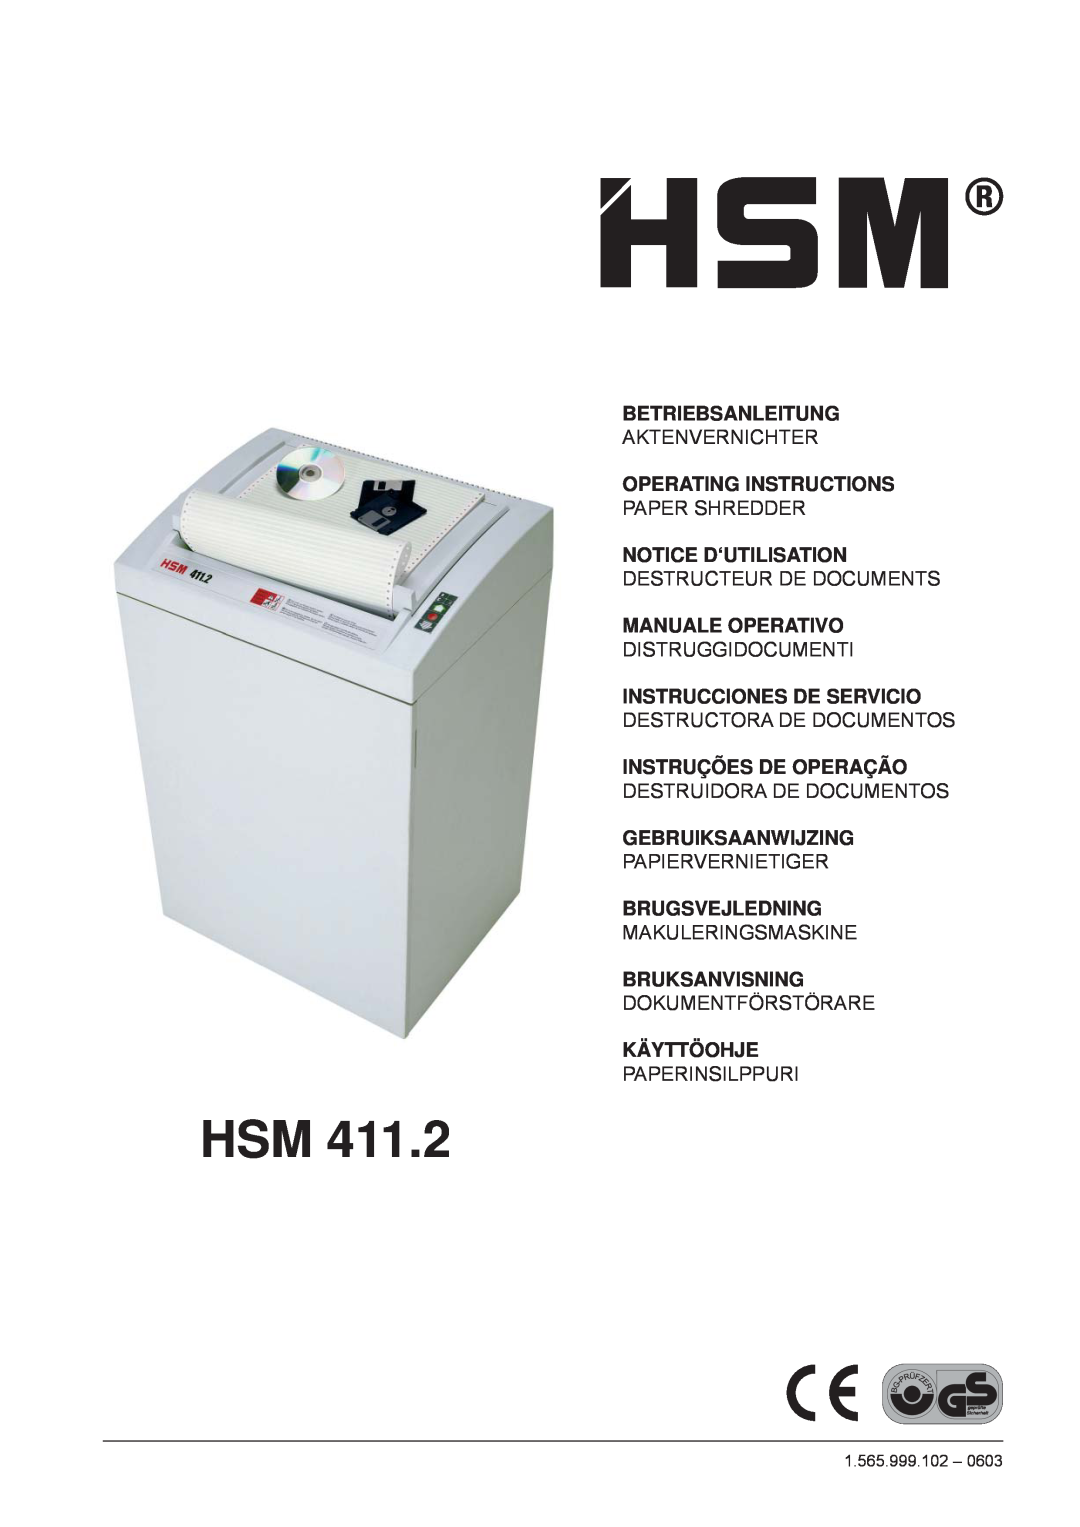 HSM HSM 411.2 operating instructions Aktenvernichter, Paper Shredder, Destructeur De Documents, Distruggidocumenti 